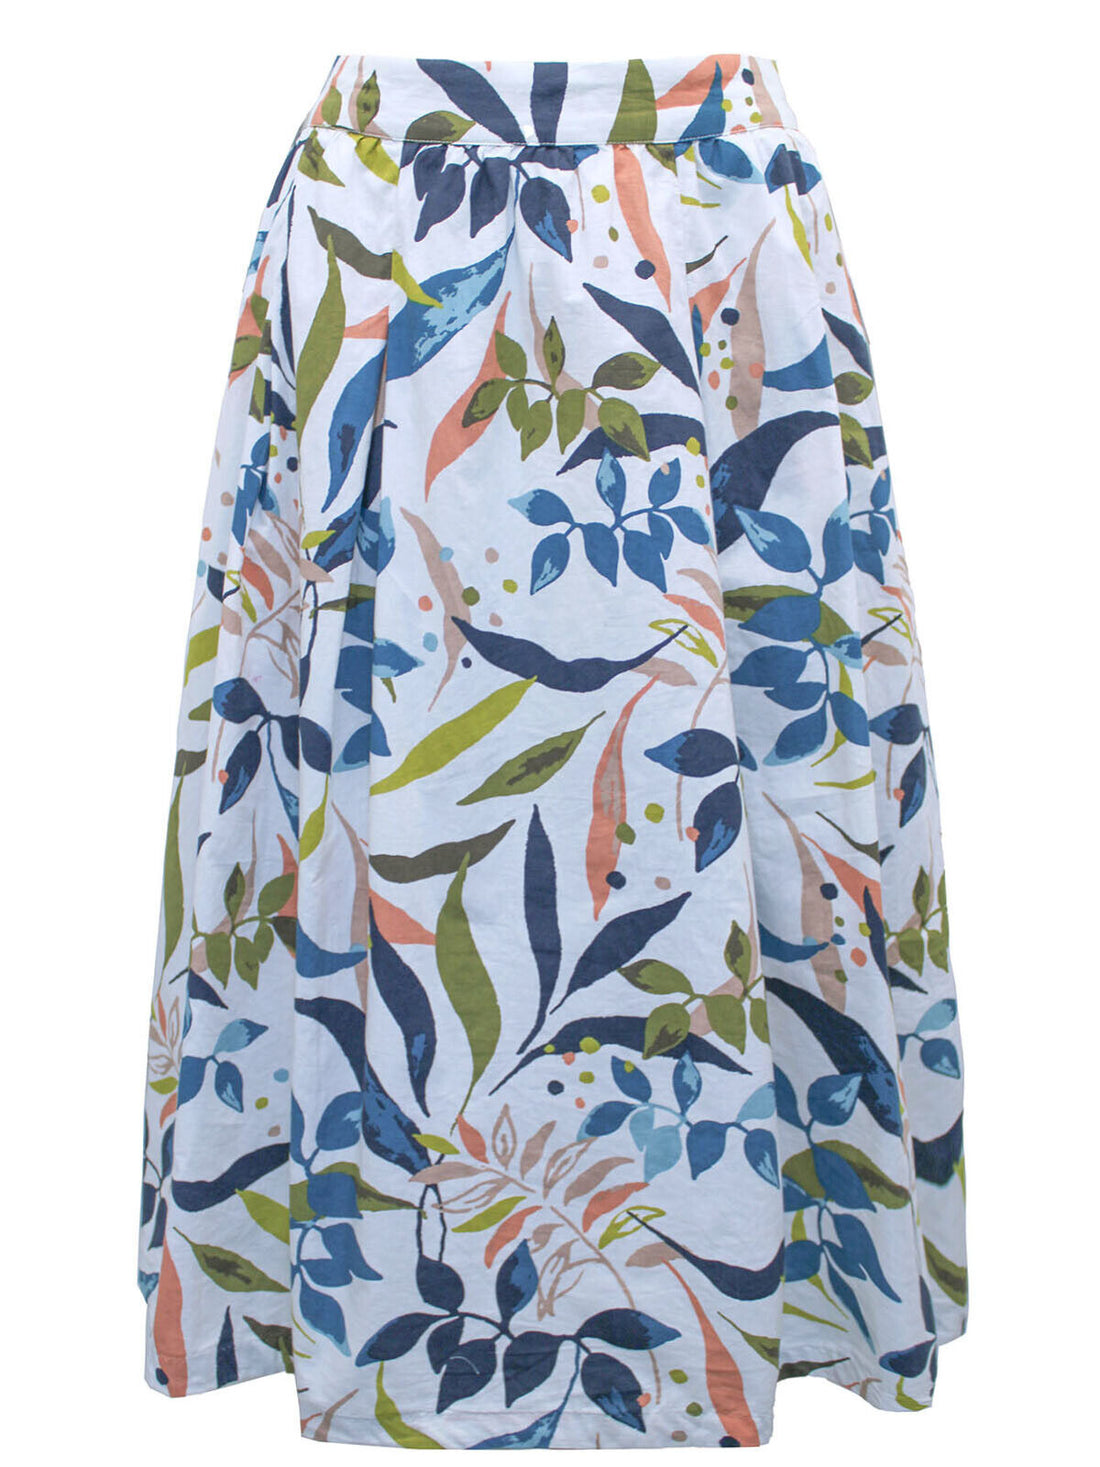 EX Seasalt White Abbey Gardens Mix Perpitch Beach Skirt Sizes 12, 14, 16 RRP £60